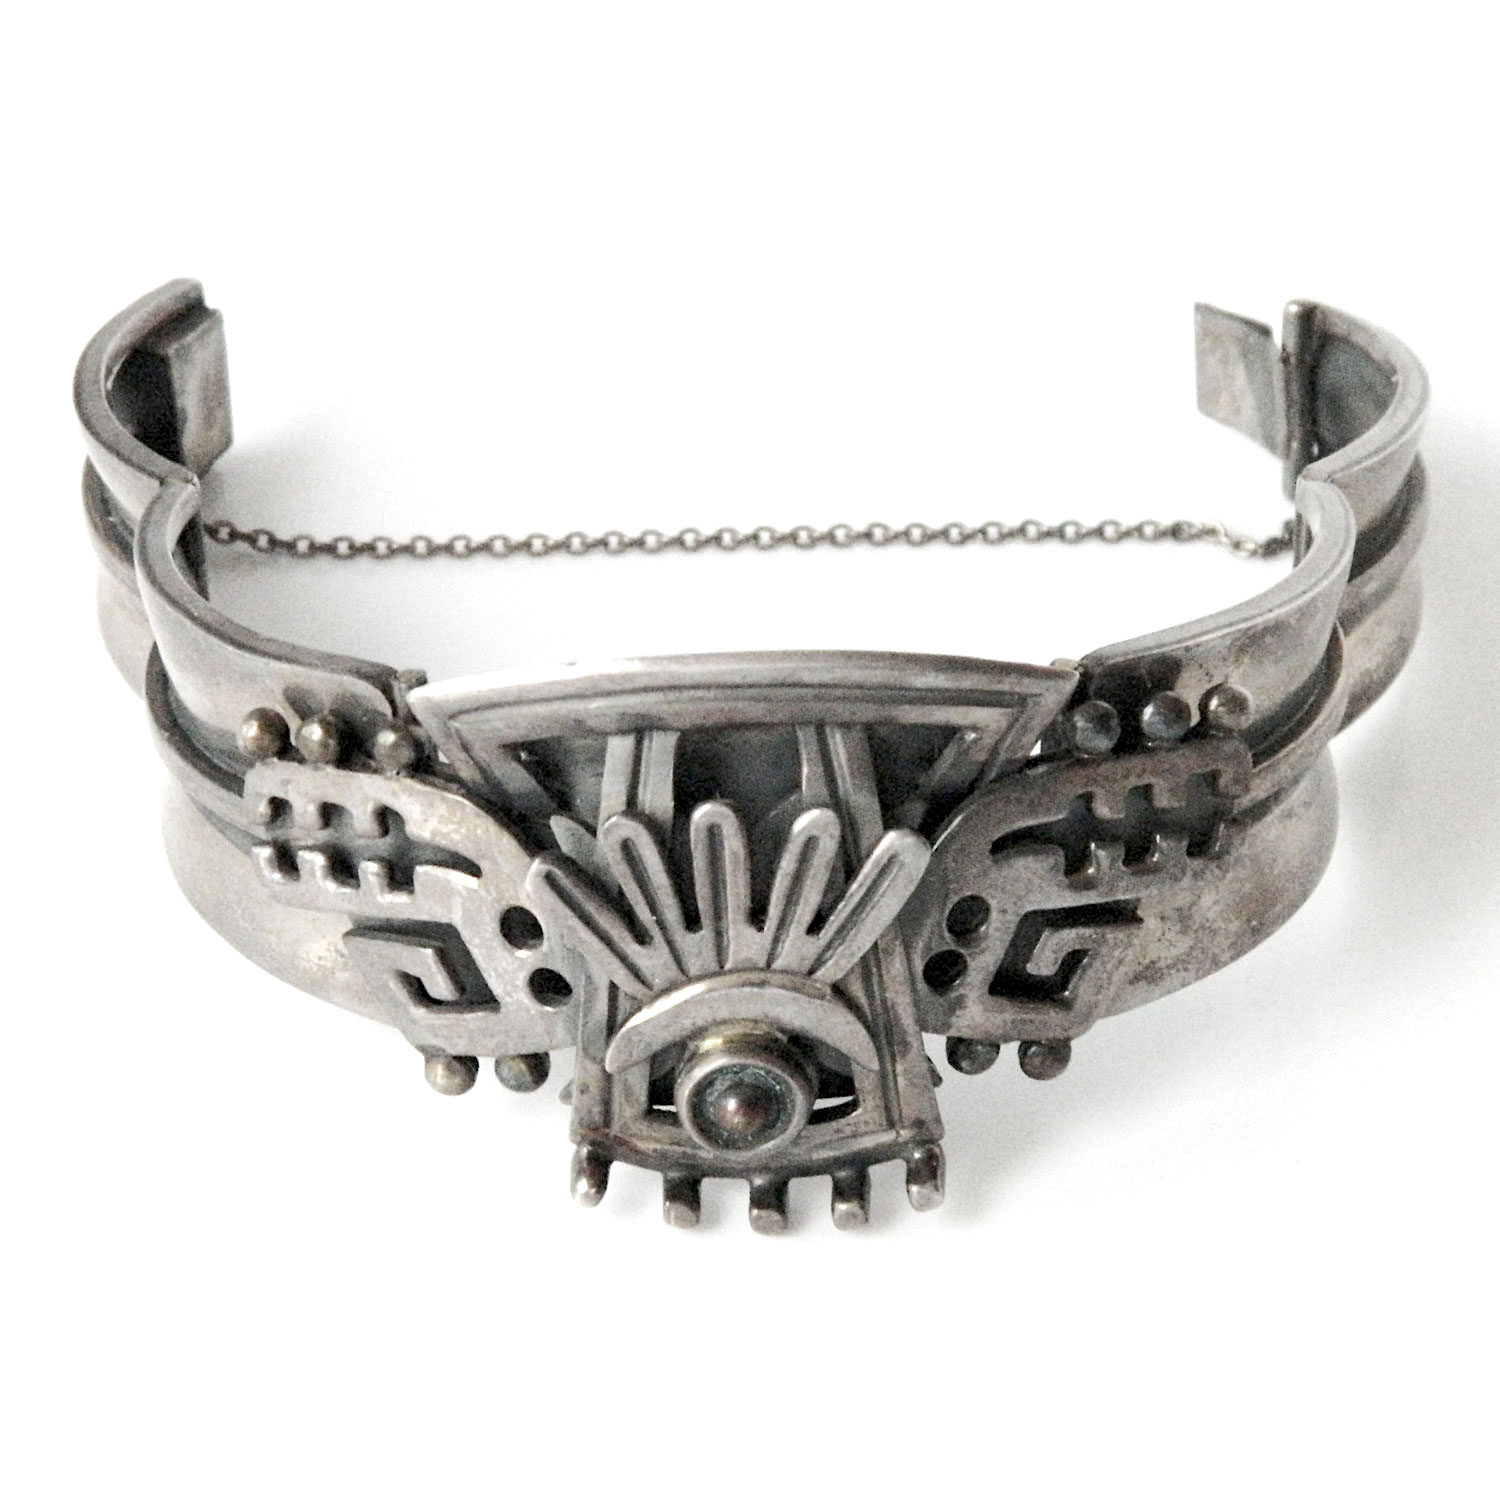 Vintage Alfredo Villasana Mexican silver bracelet